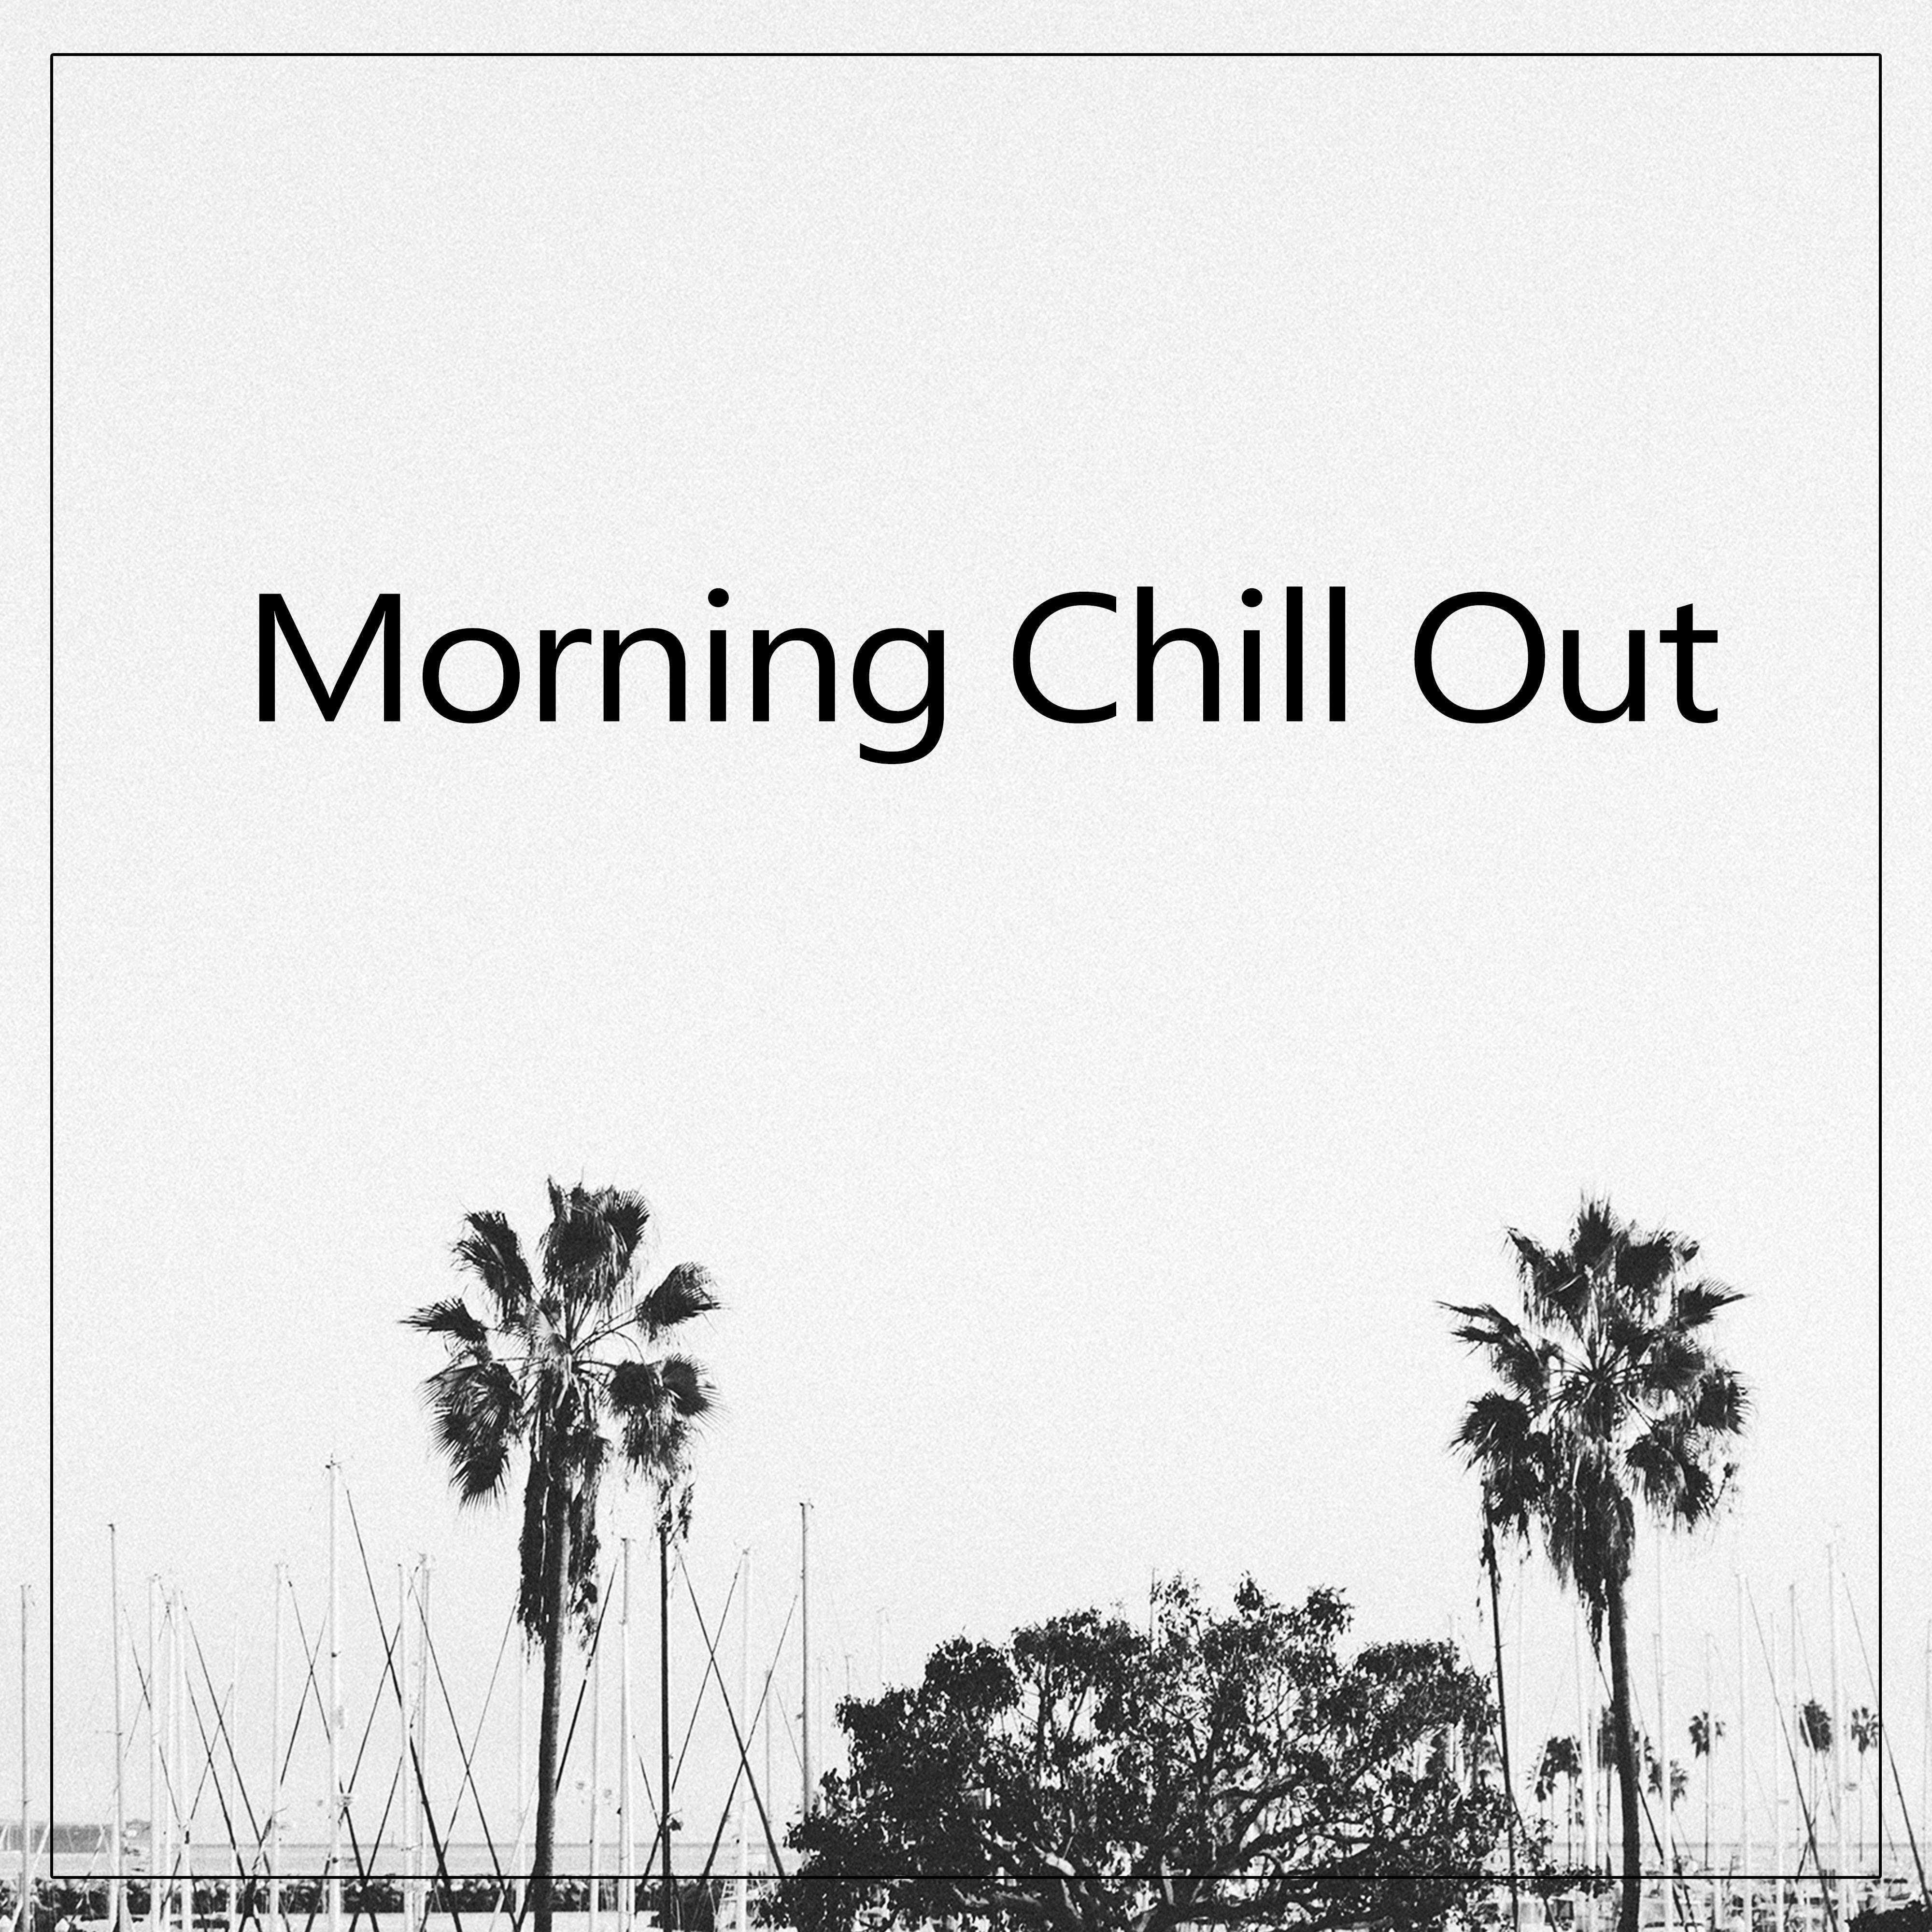 Morning Chill Out - Sunset Lounge, Sun Salutation, Morning Tea